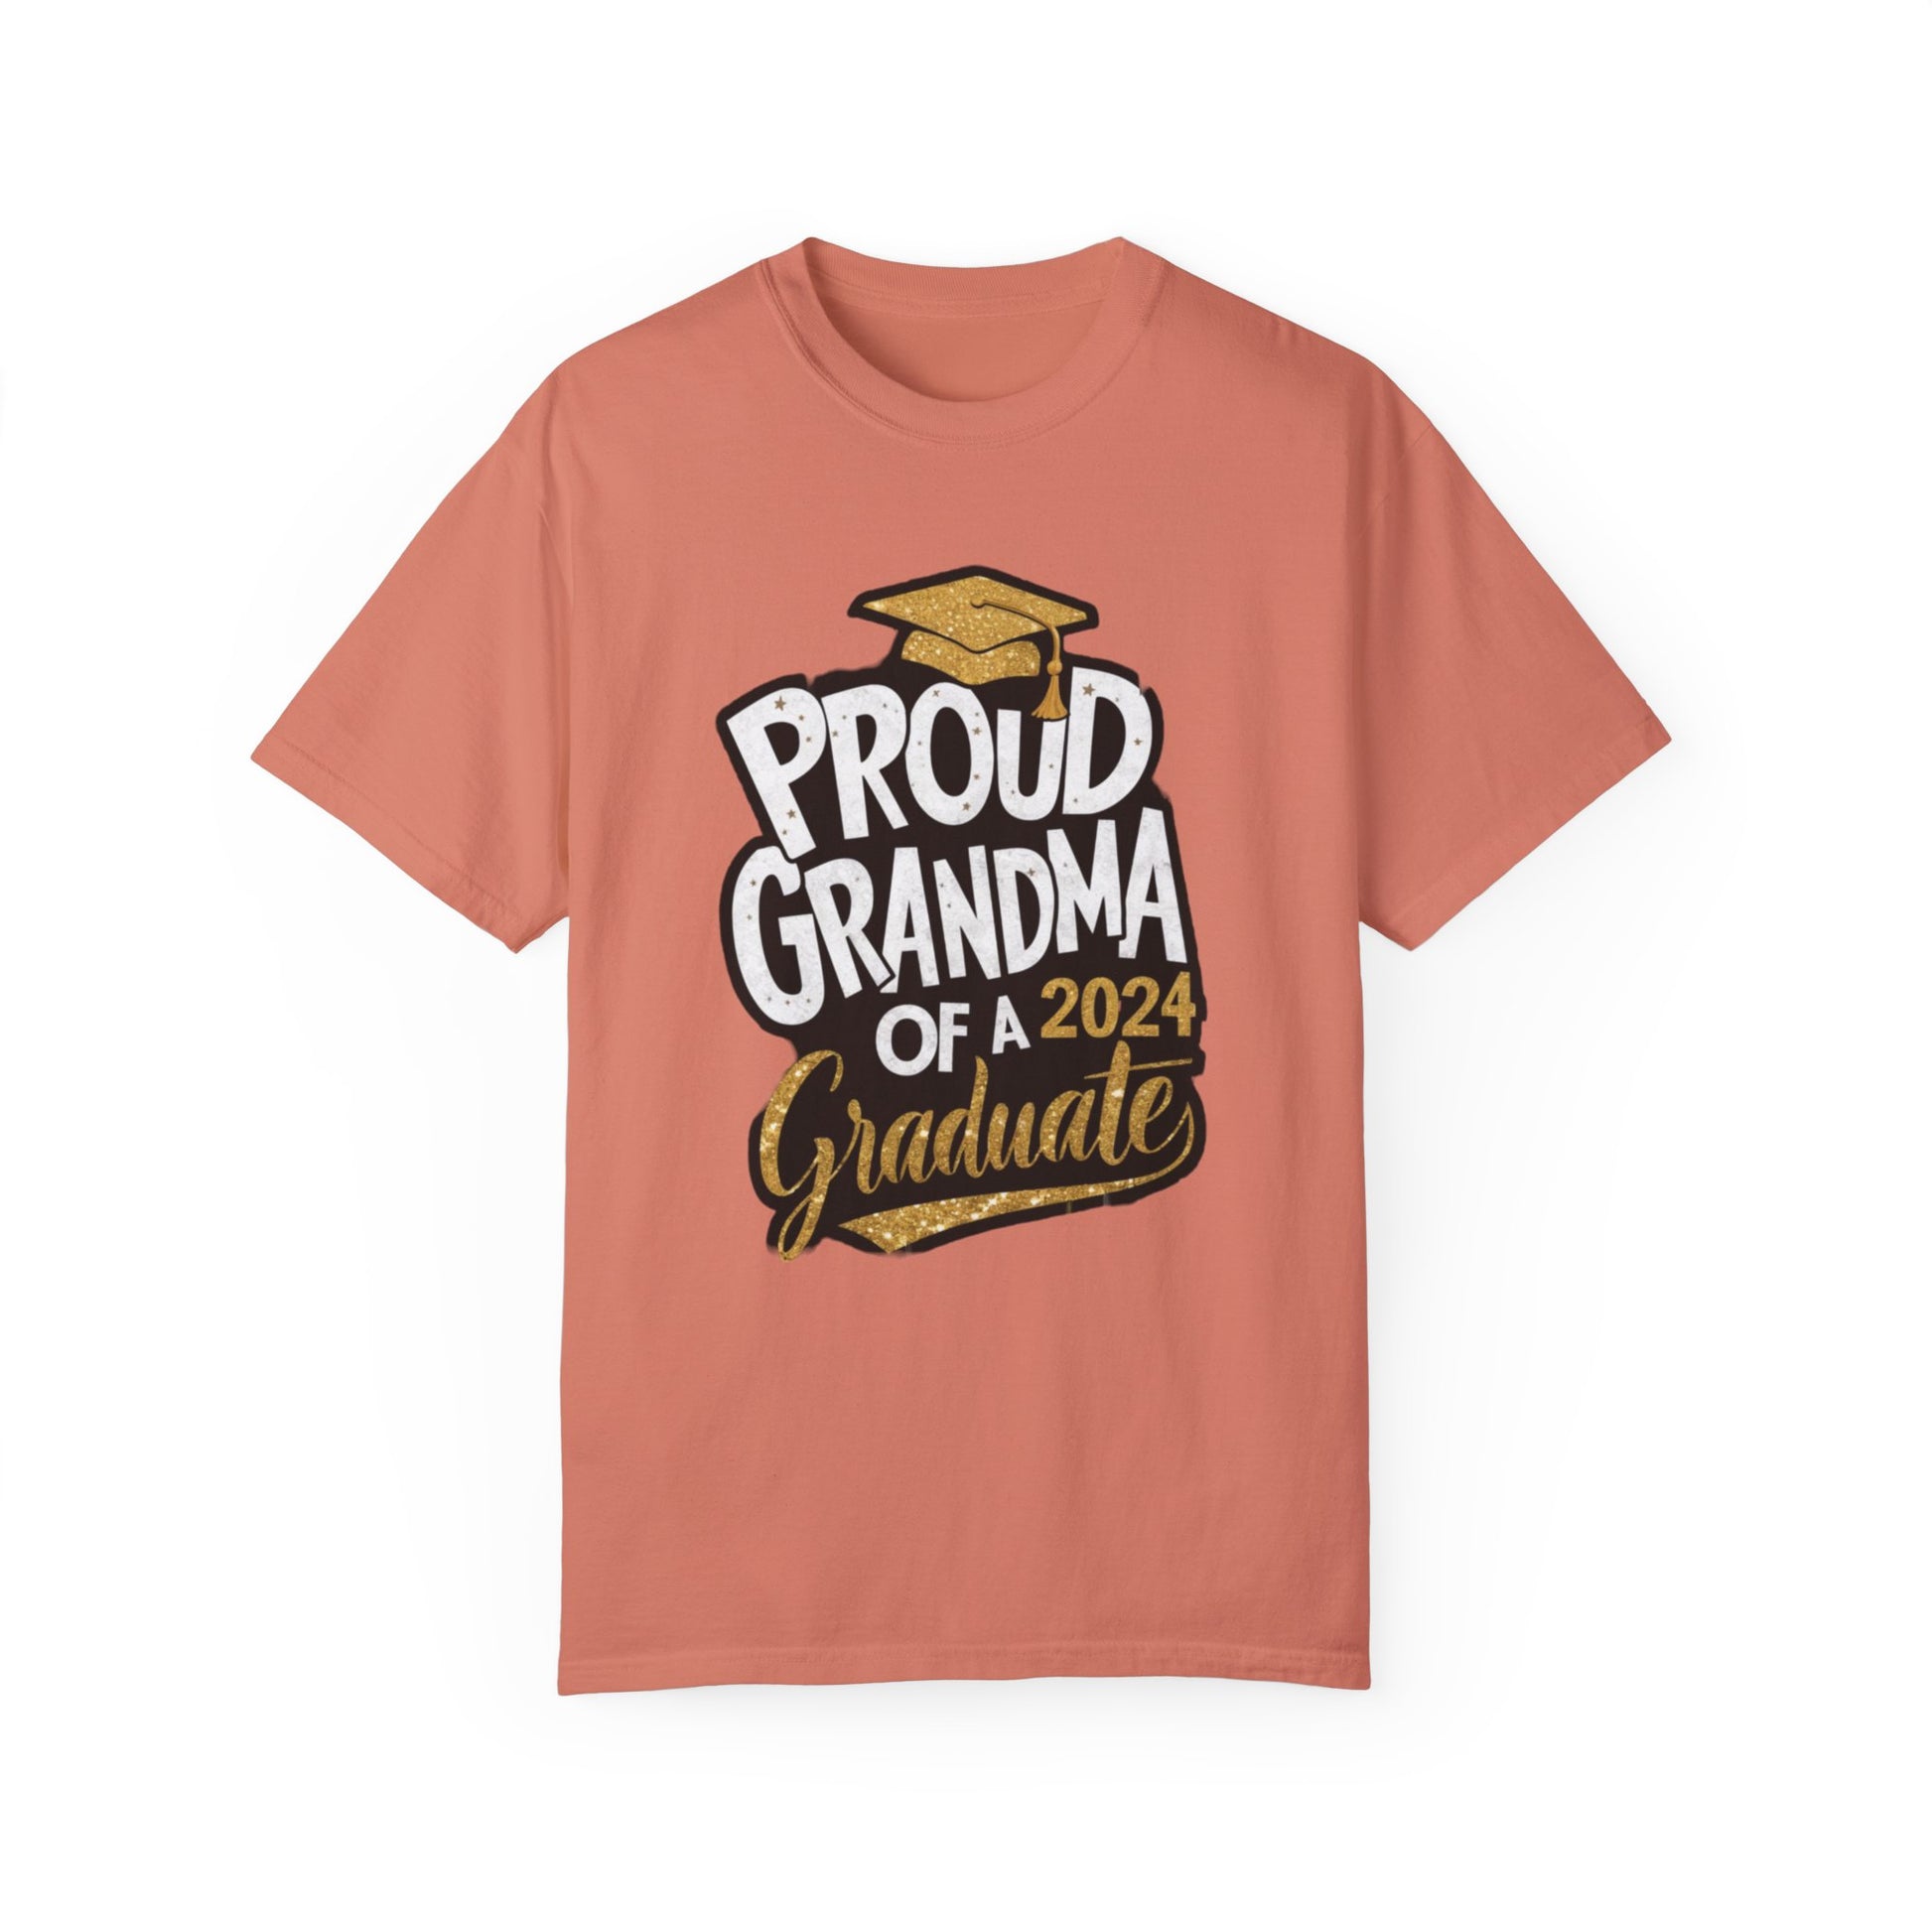 Proud of Grandma 2024 Graduate Unisex Garment-dyed T-shirt Cotton Funny Humorous Graphic Soft Premium Unisex Men Women Terracotta T-shirt Birthday Gift-14